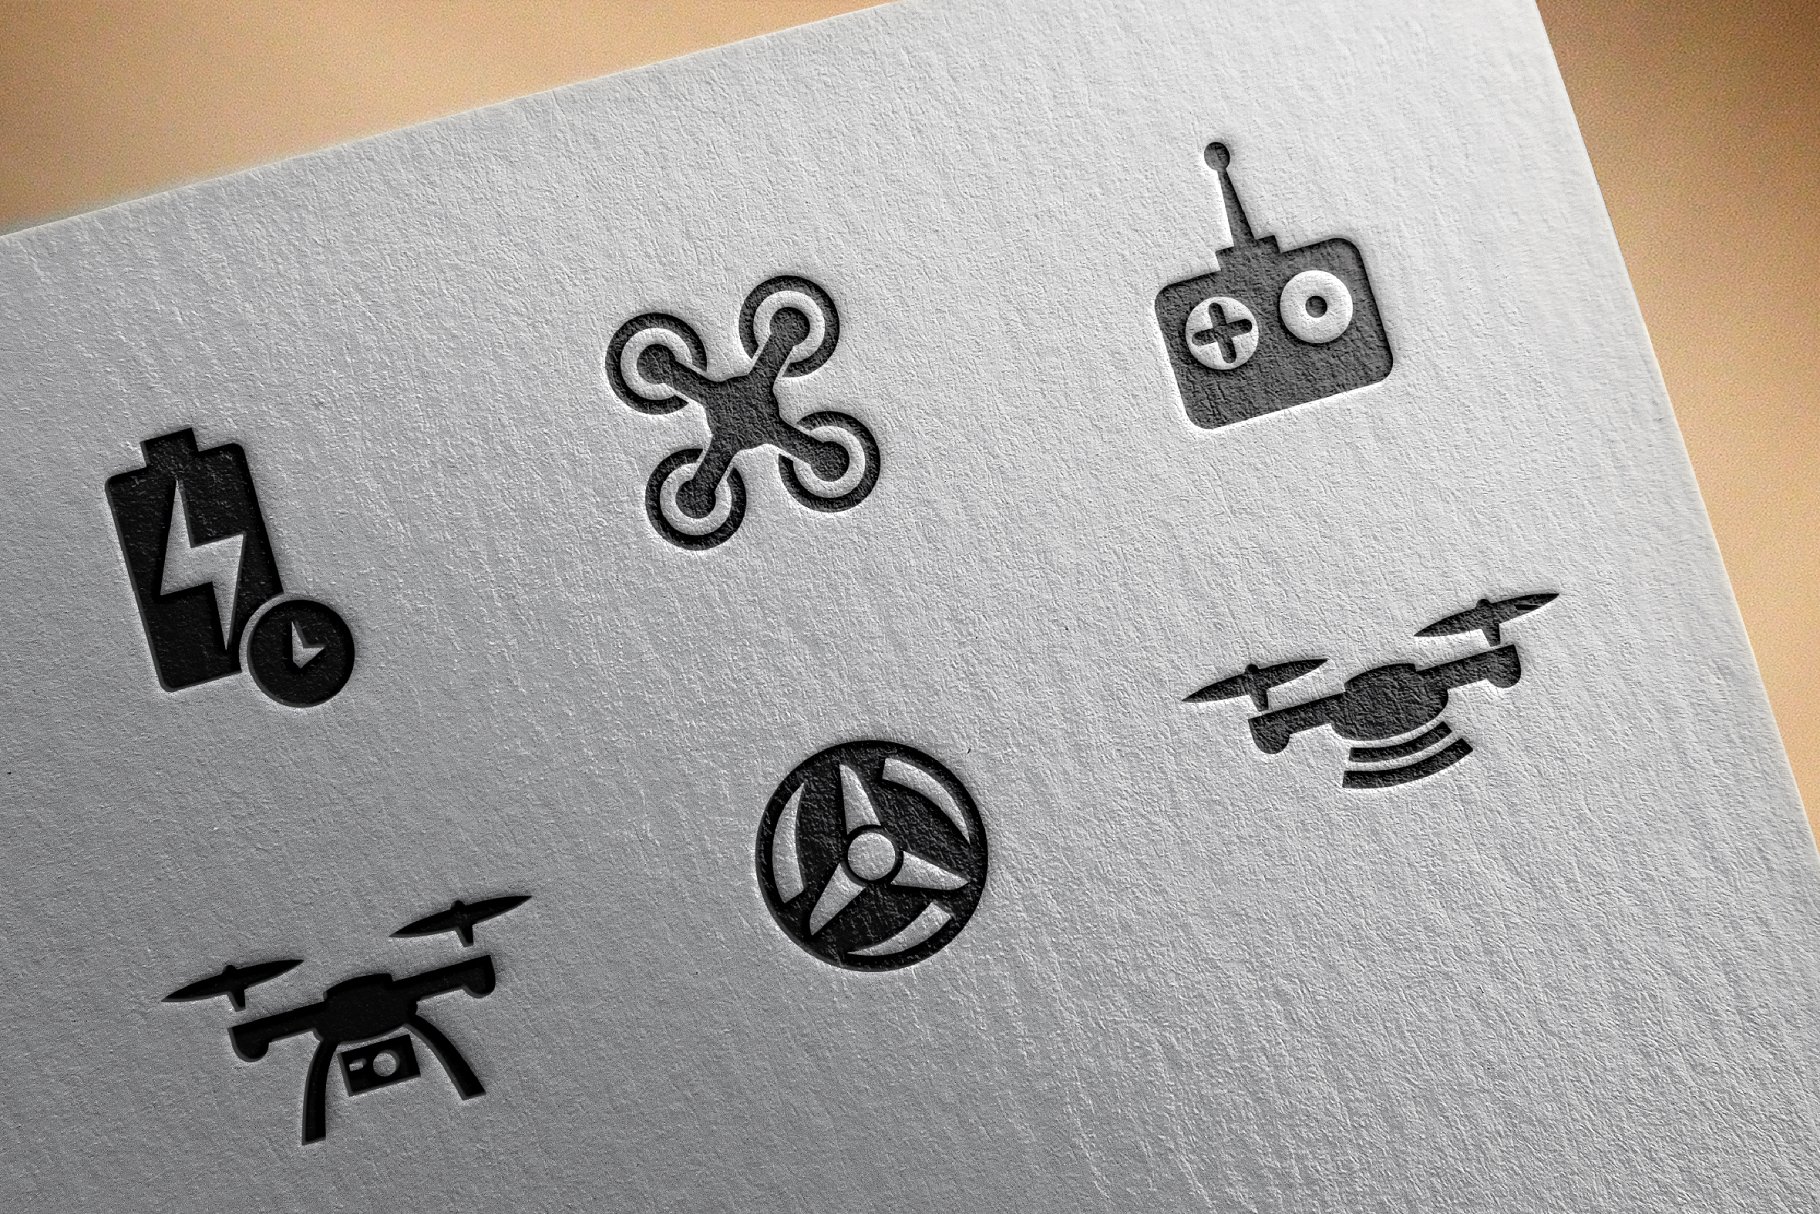 各种无人机图标 Drone icons #92314